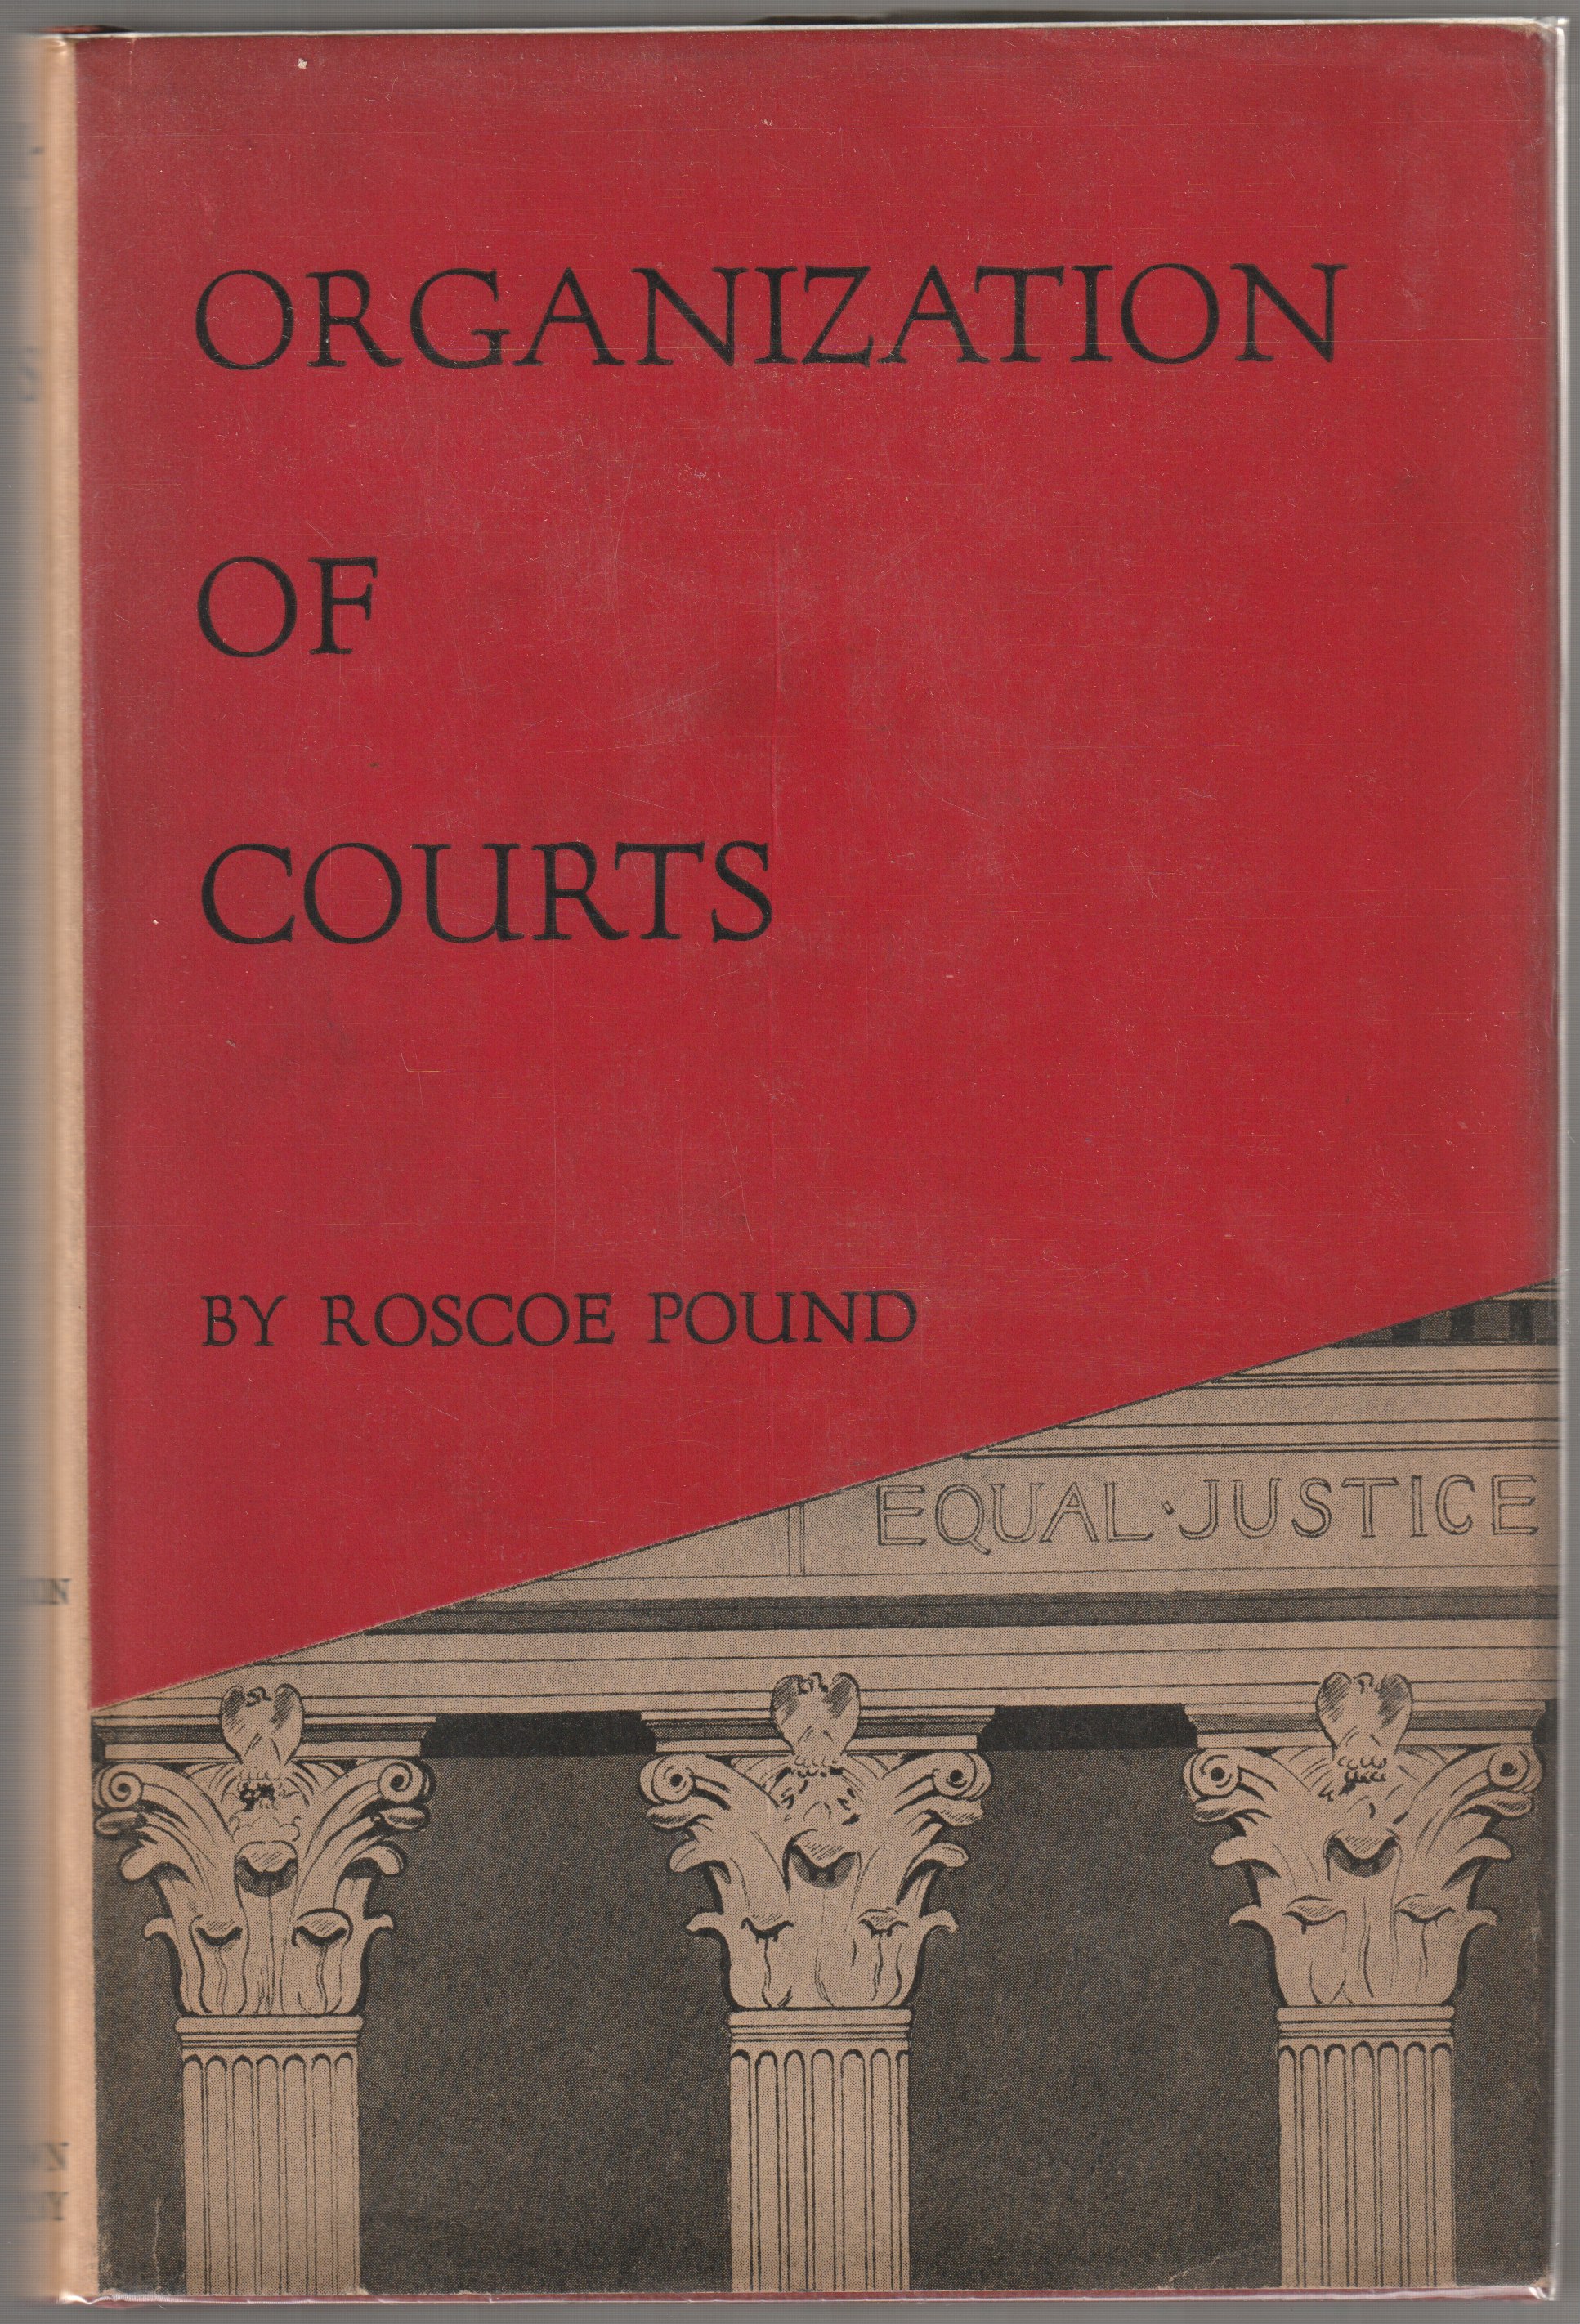 Organization of courts.